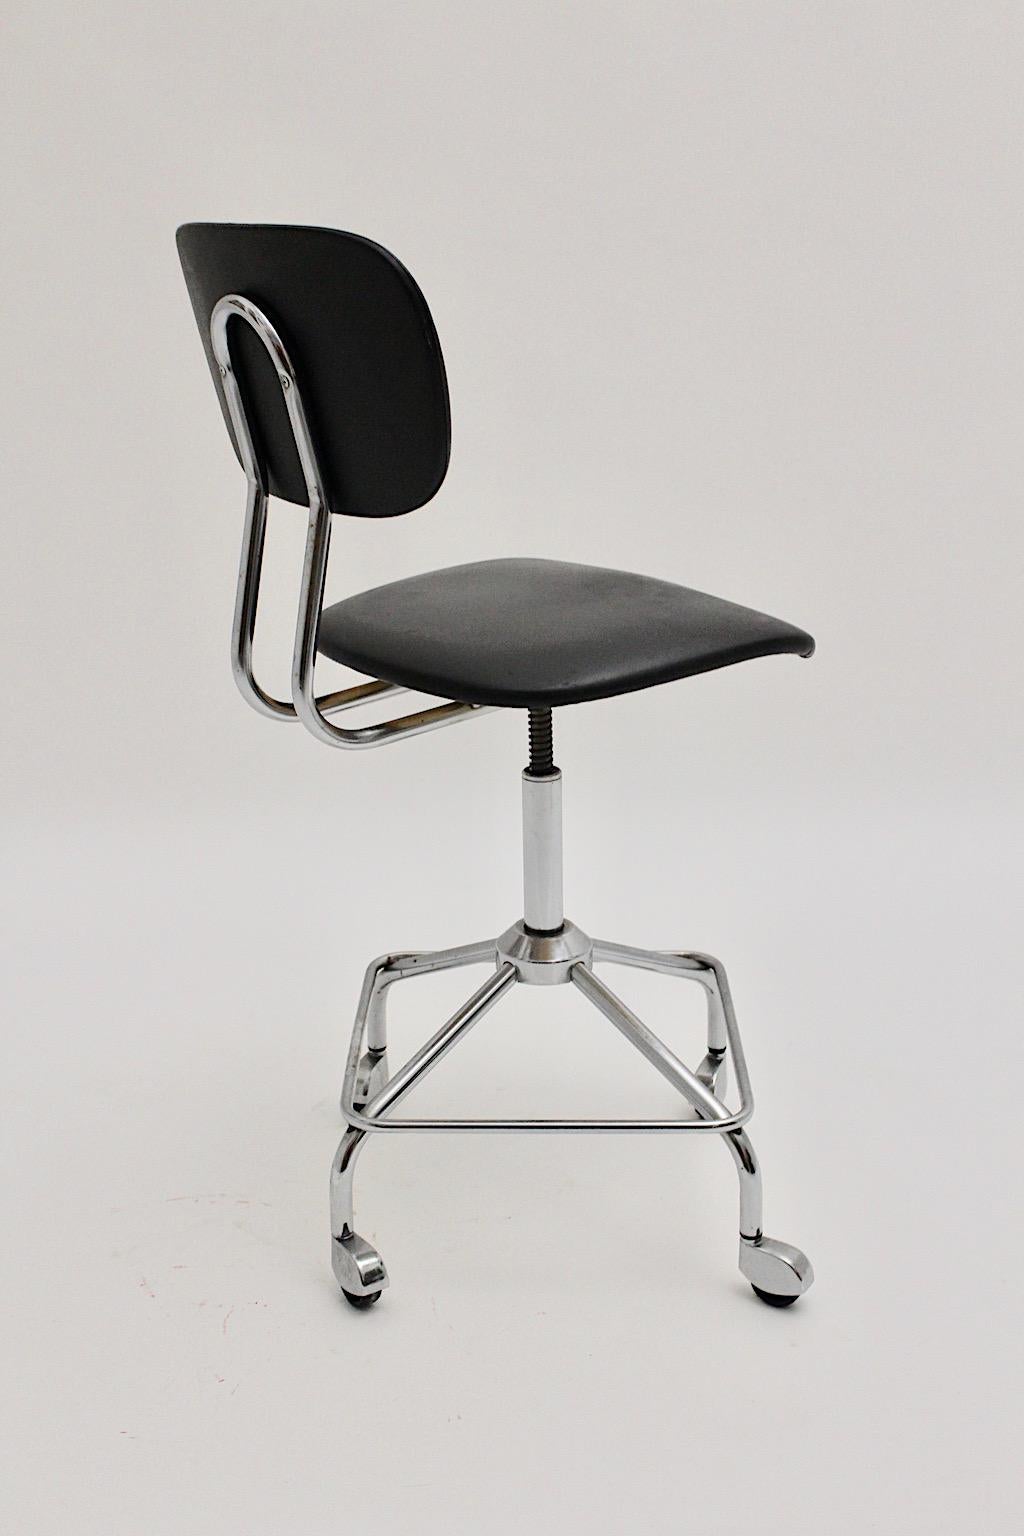 Mid-Century Modern Vintage Chromed Black Desk Chair Office Chair, 1950s, Germany 4